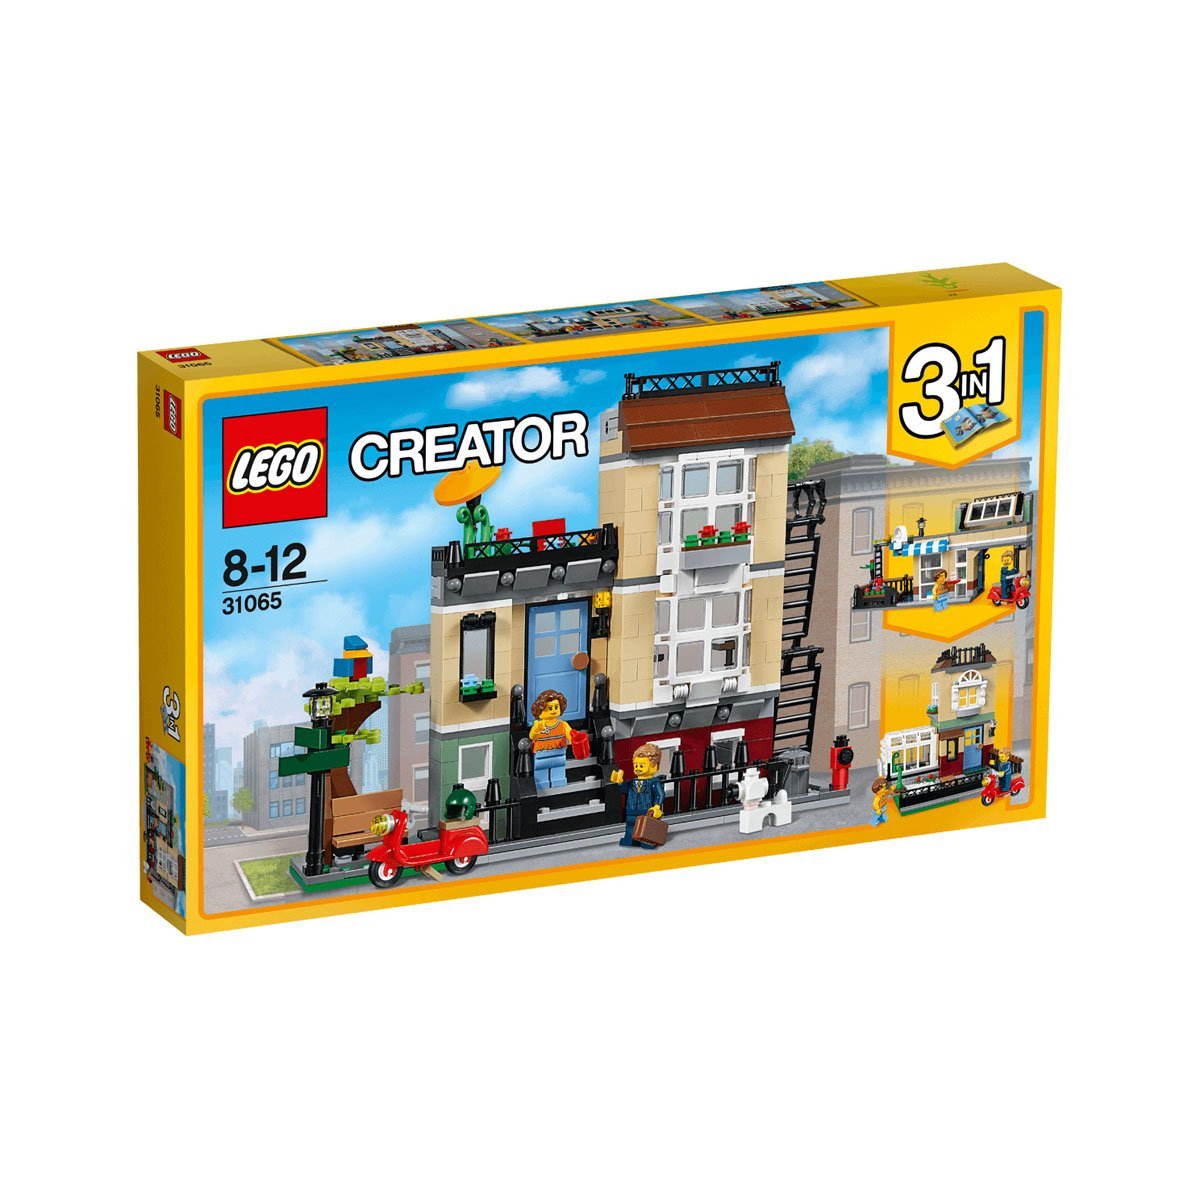 Town House 2017 Lego